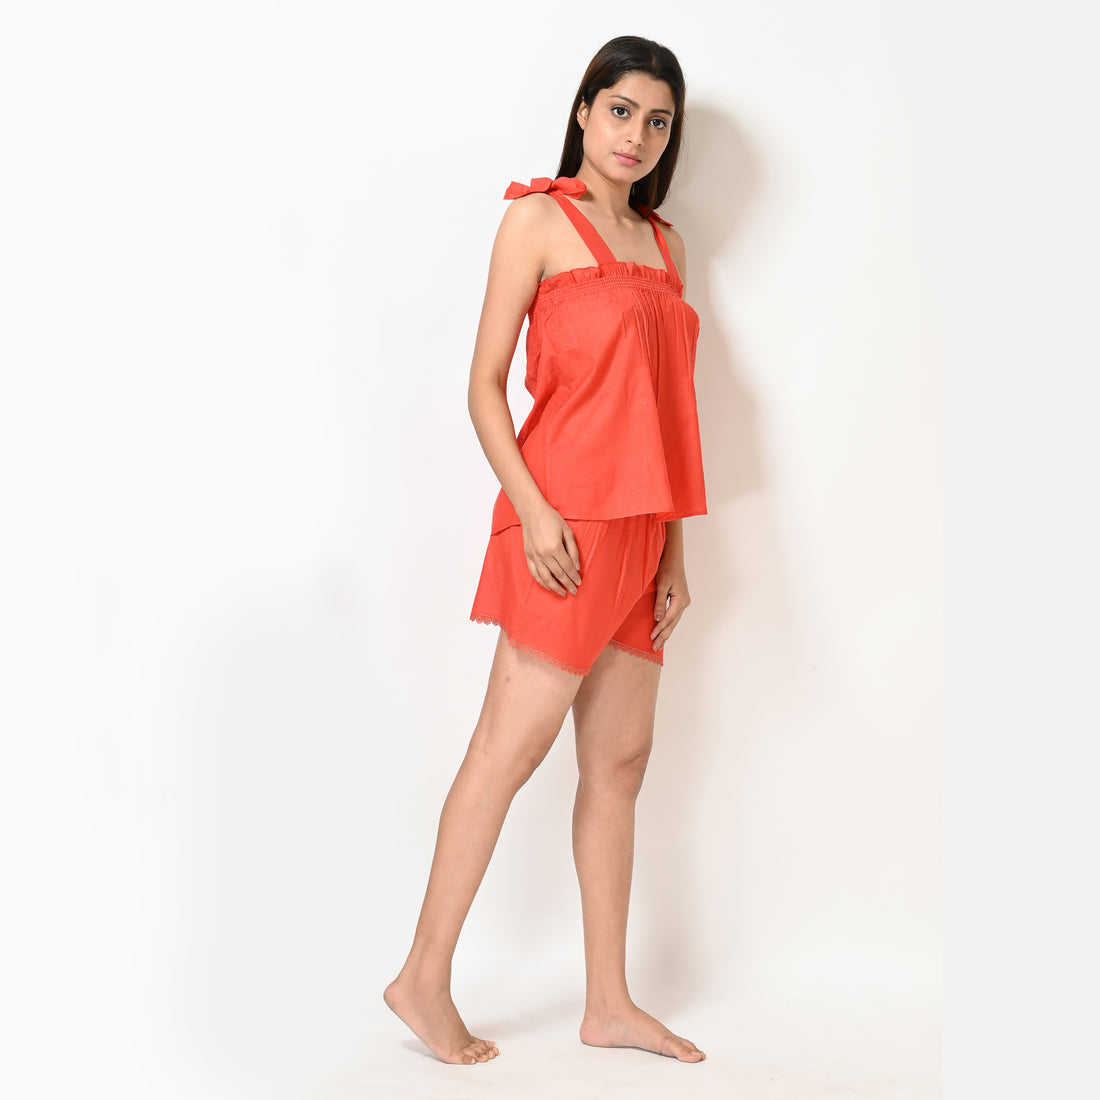 Orange Polka Dot Women's Cotton Nightwear Set with Top and Shorts